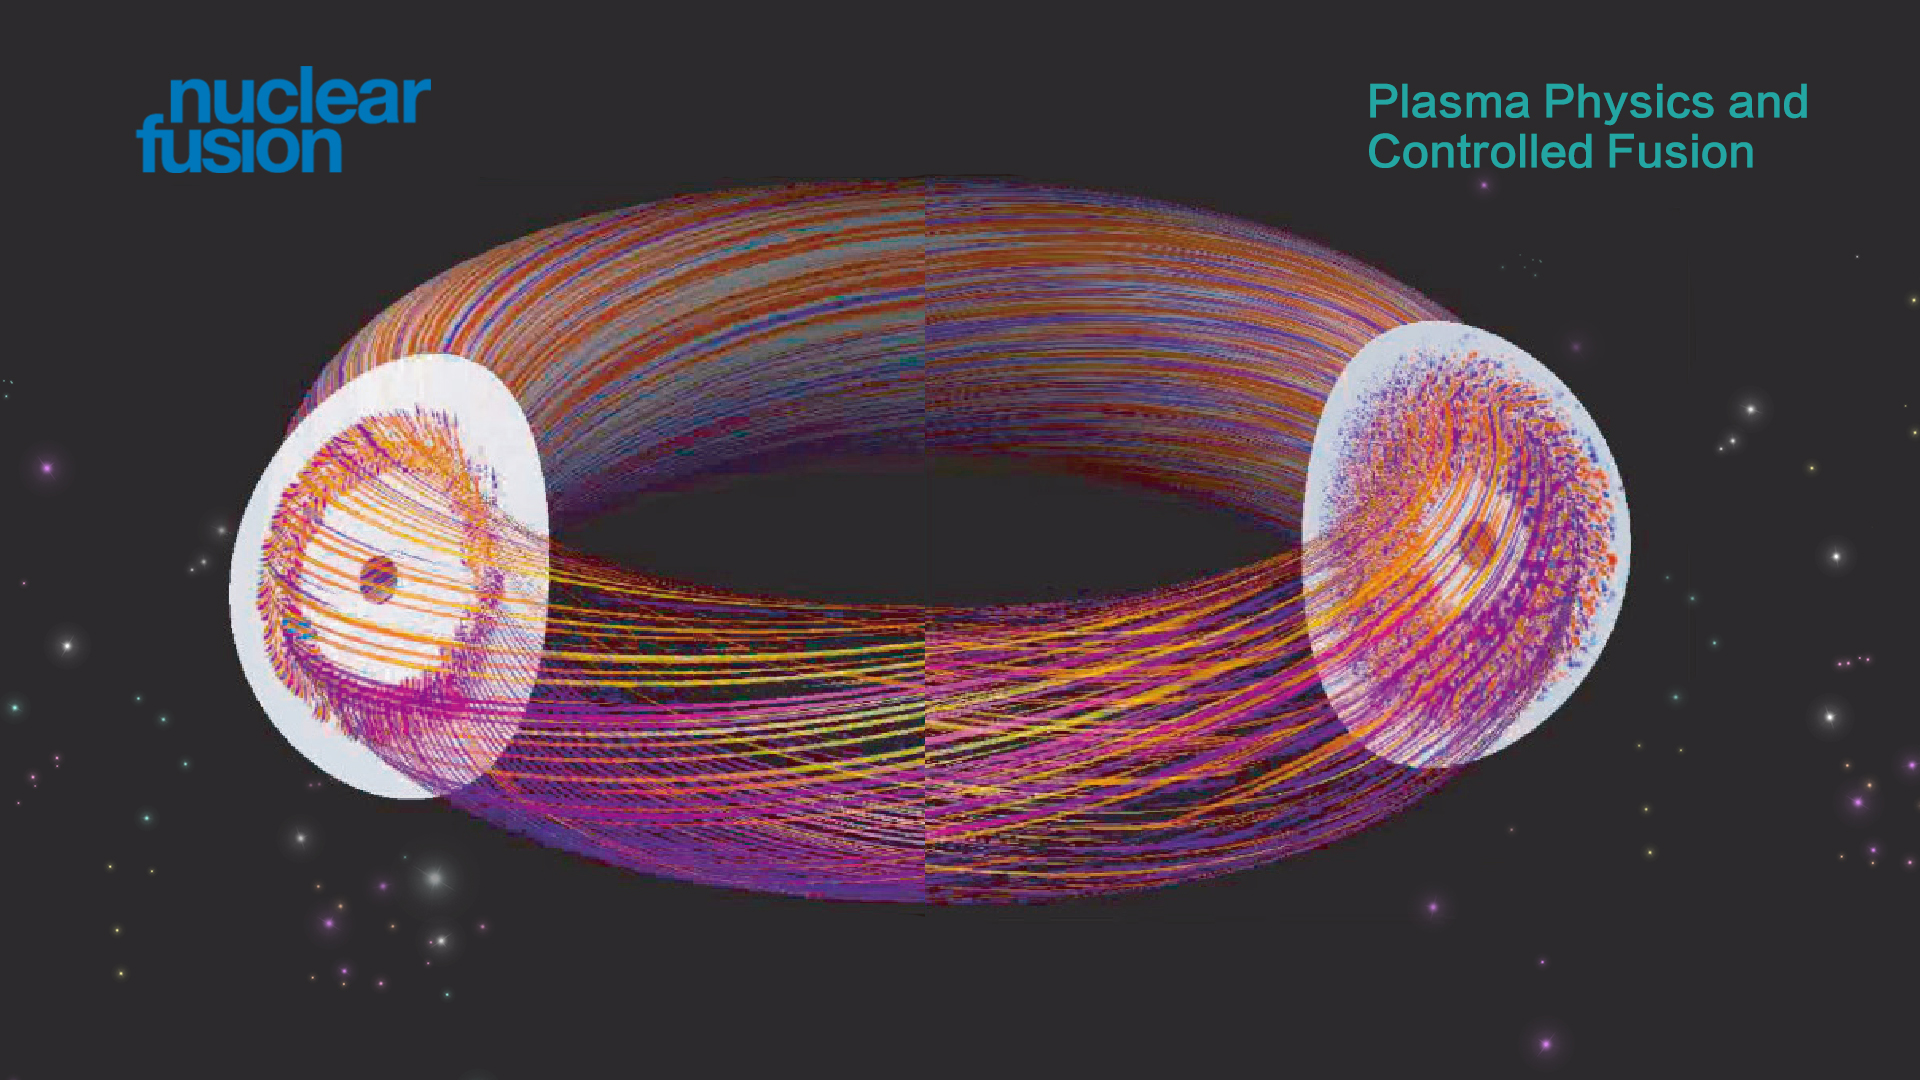 Advances in understanding of toroidal plasma turbulent transport